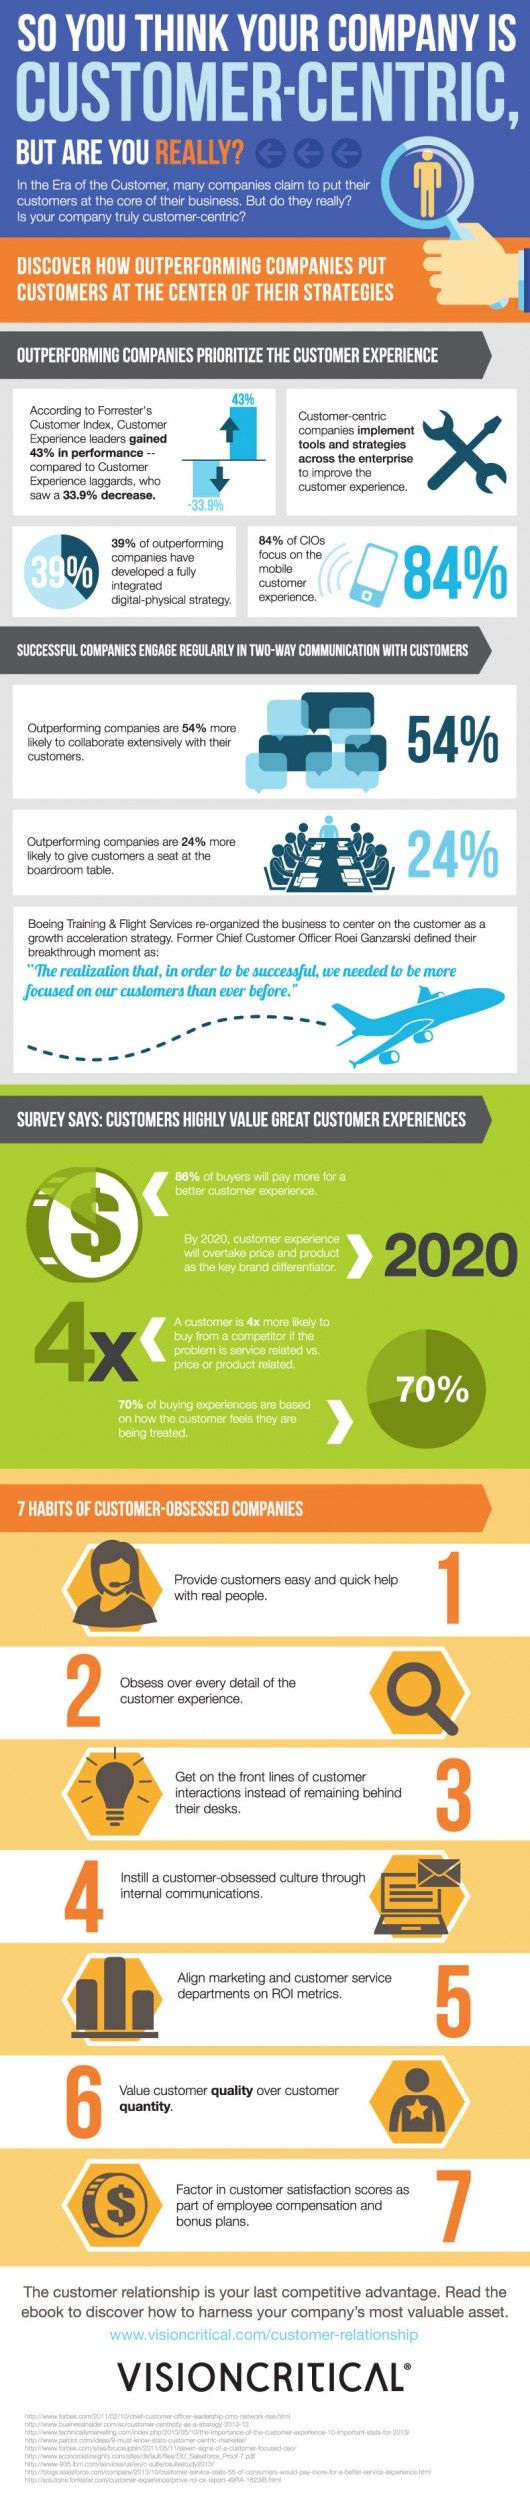 customer-centric-infographic